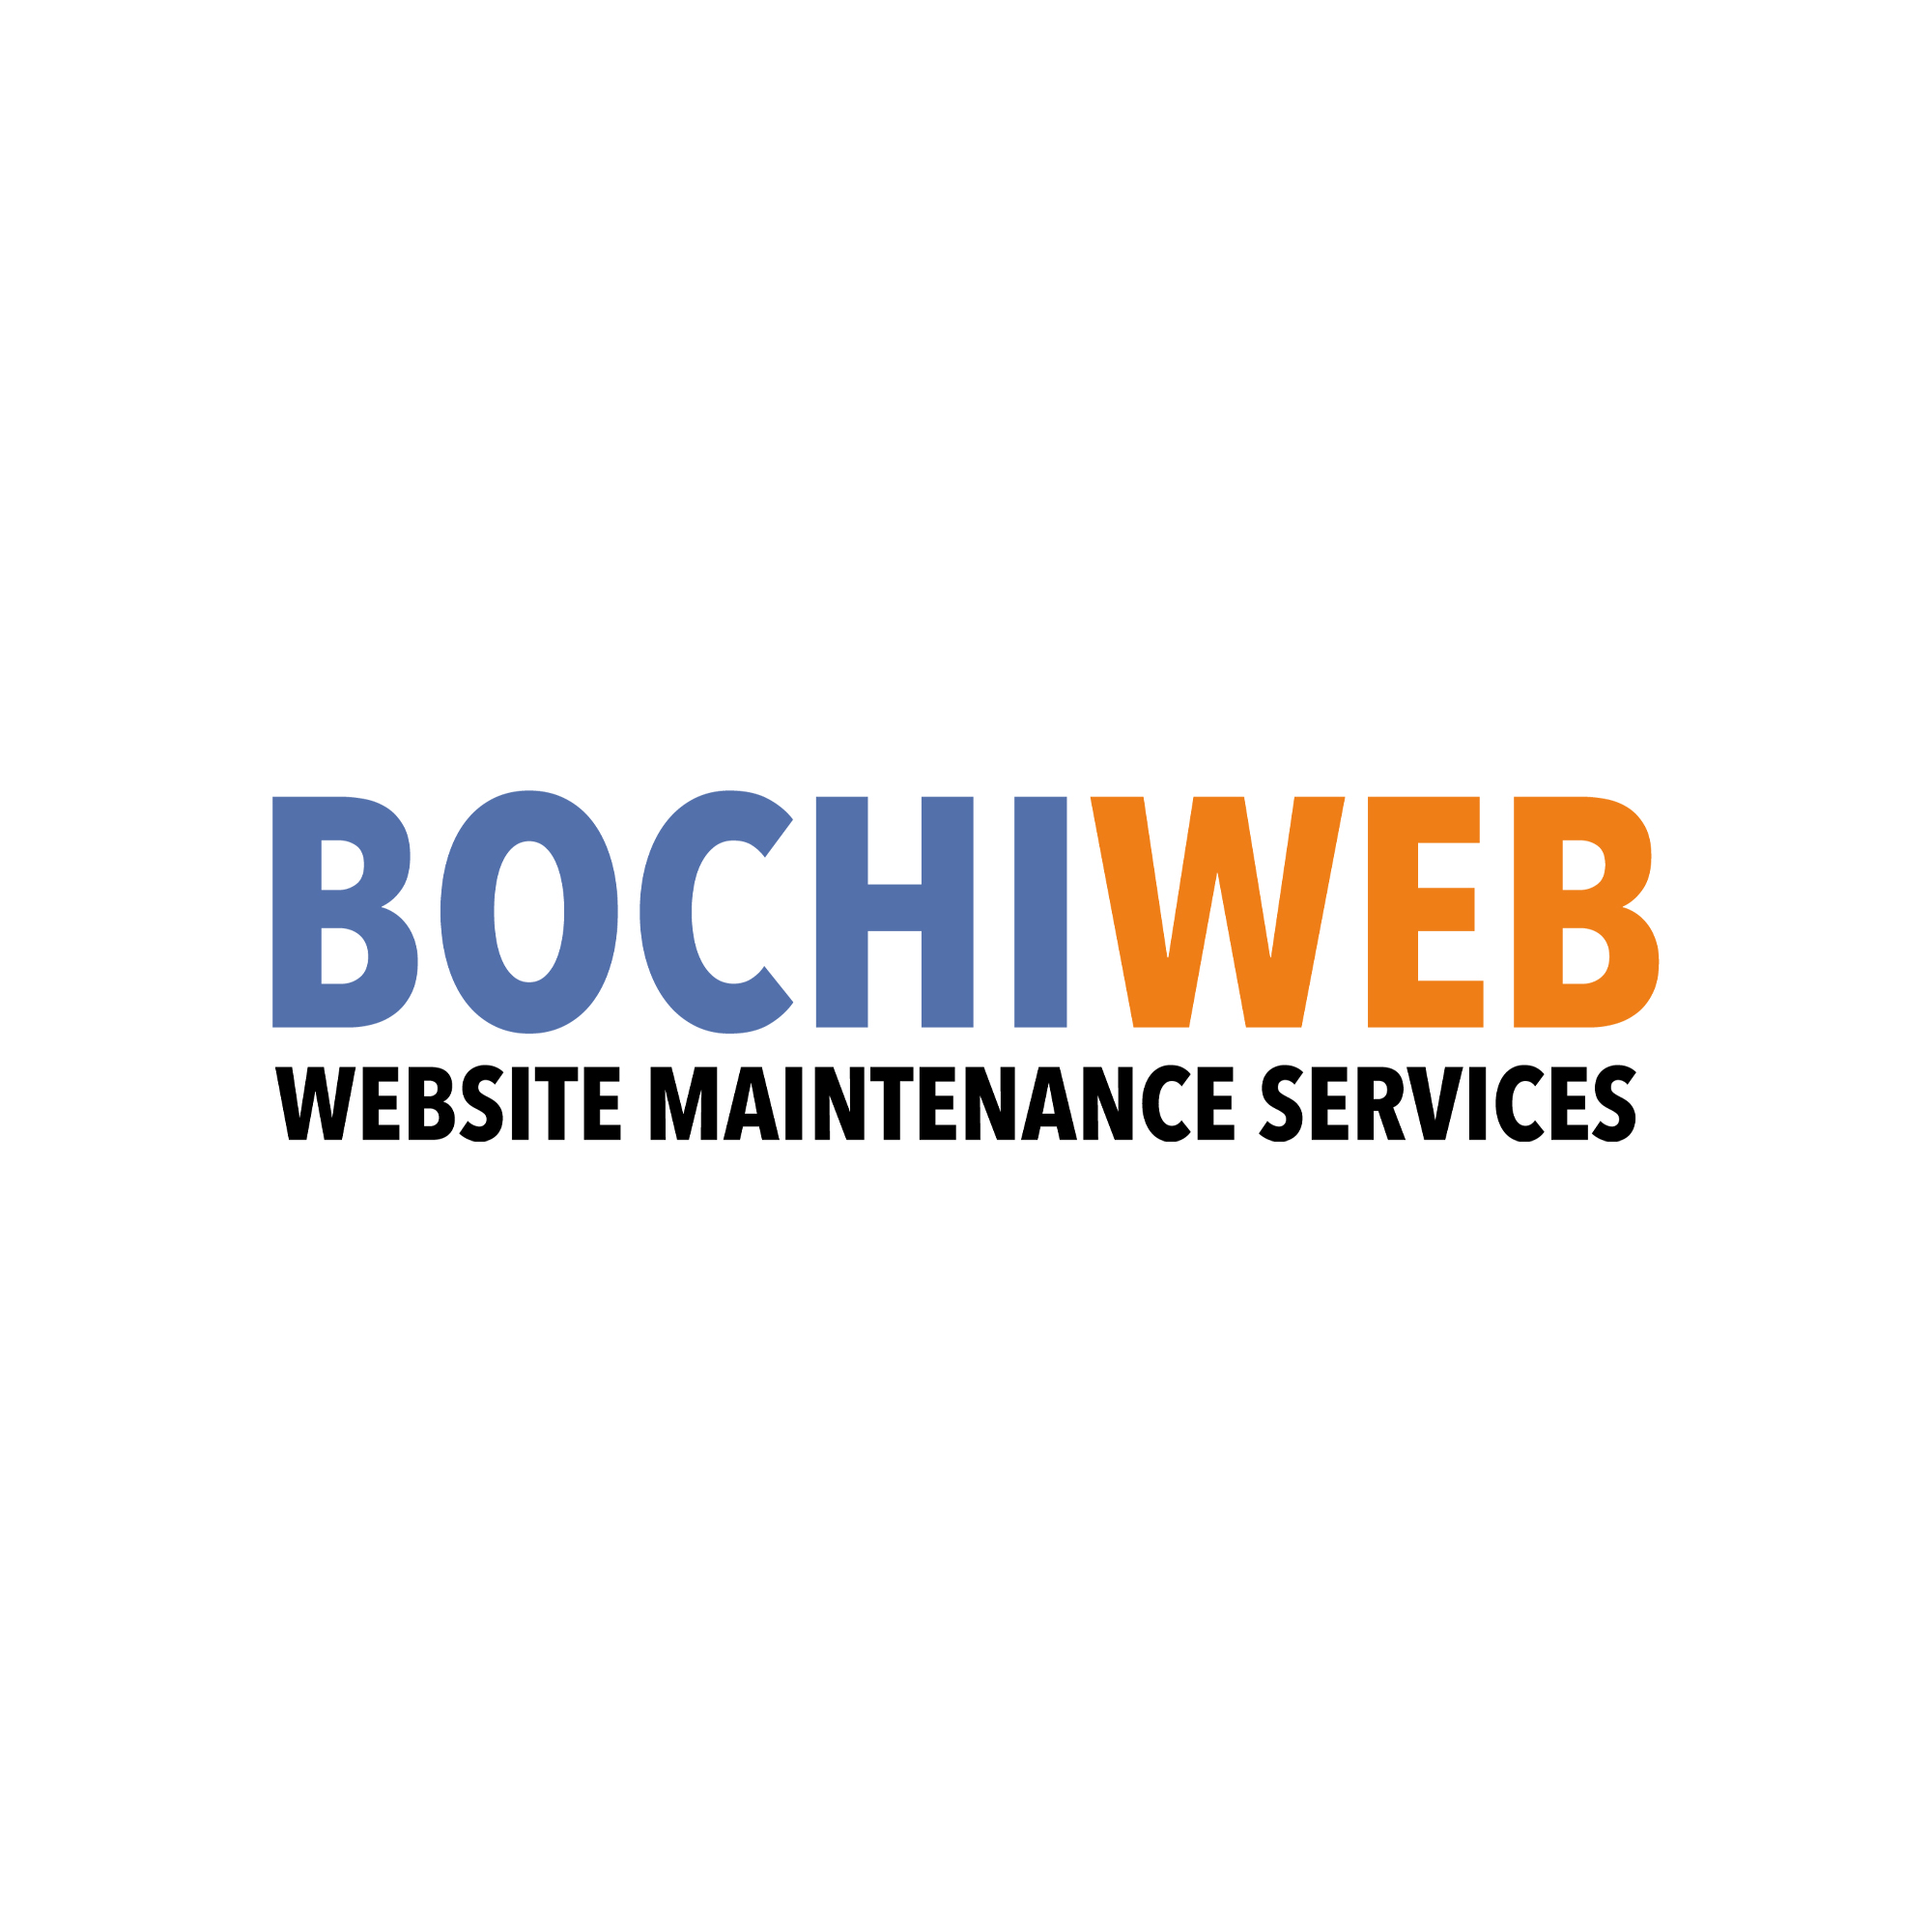 website-maintenance-services-bochi-web.jpg